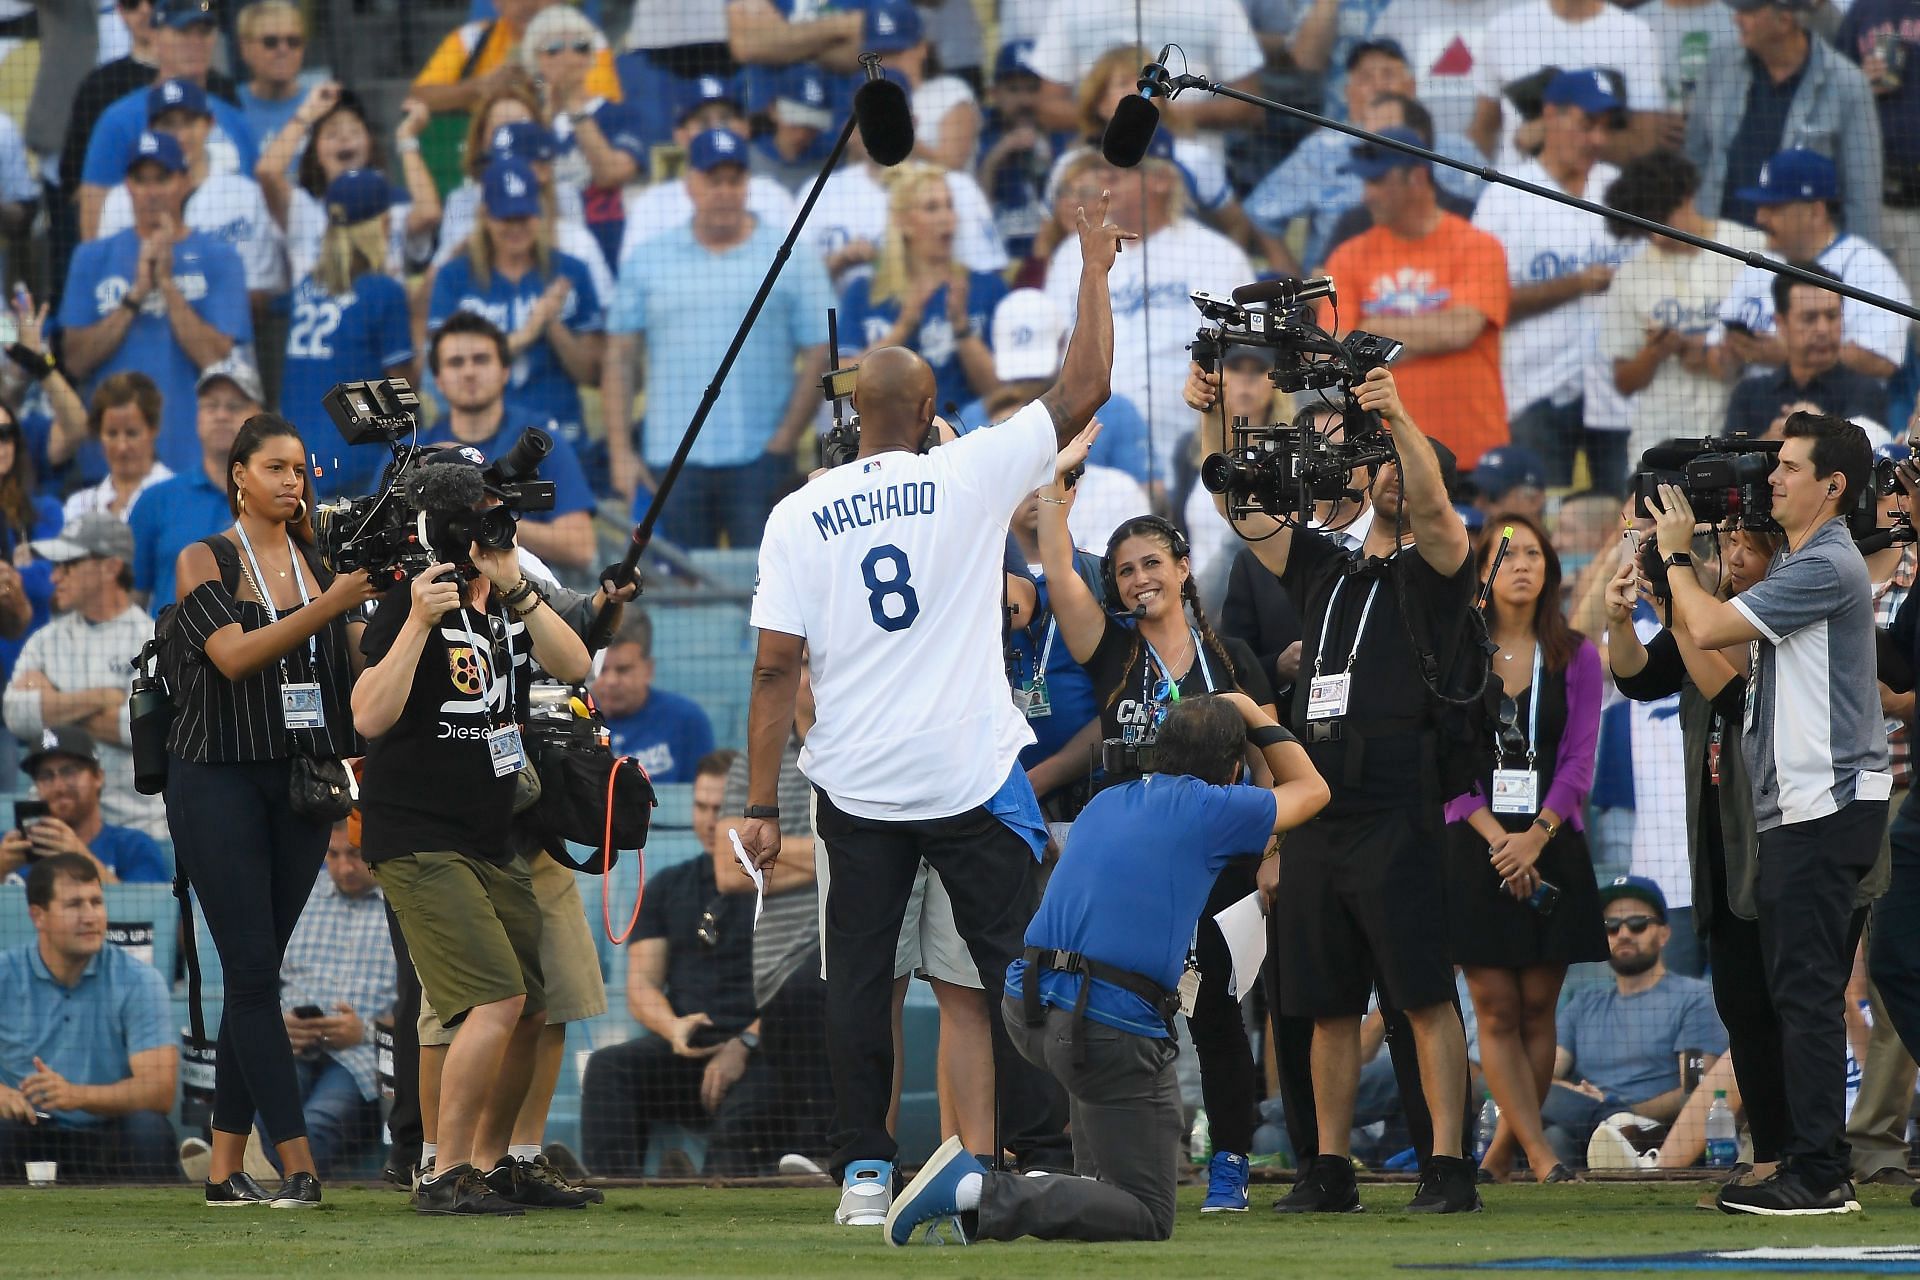 Natalia Bryant Debuts the Nike Kobe 6 Dodgers Colorway - Sports  Illustrated FanNation Kicks News, Analysis and More